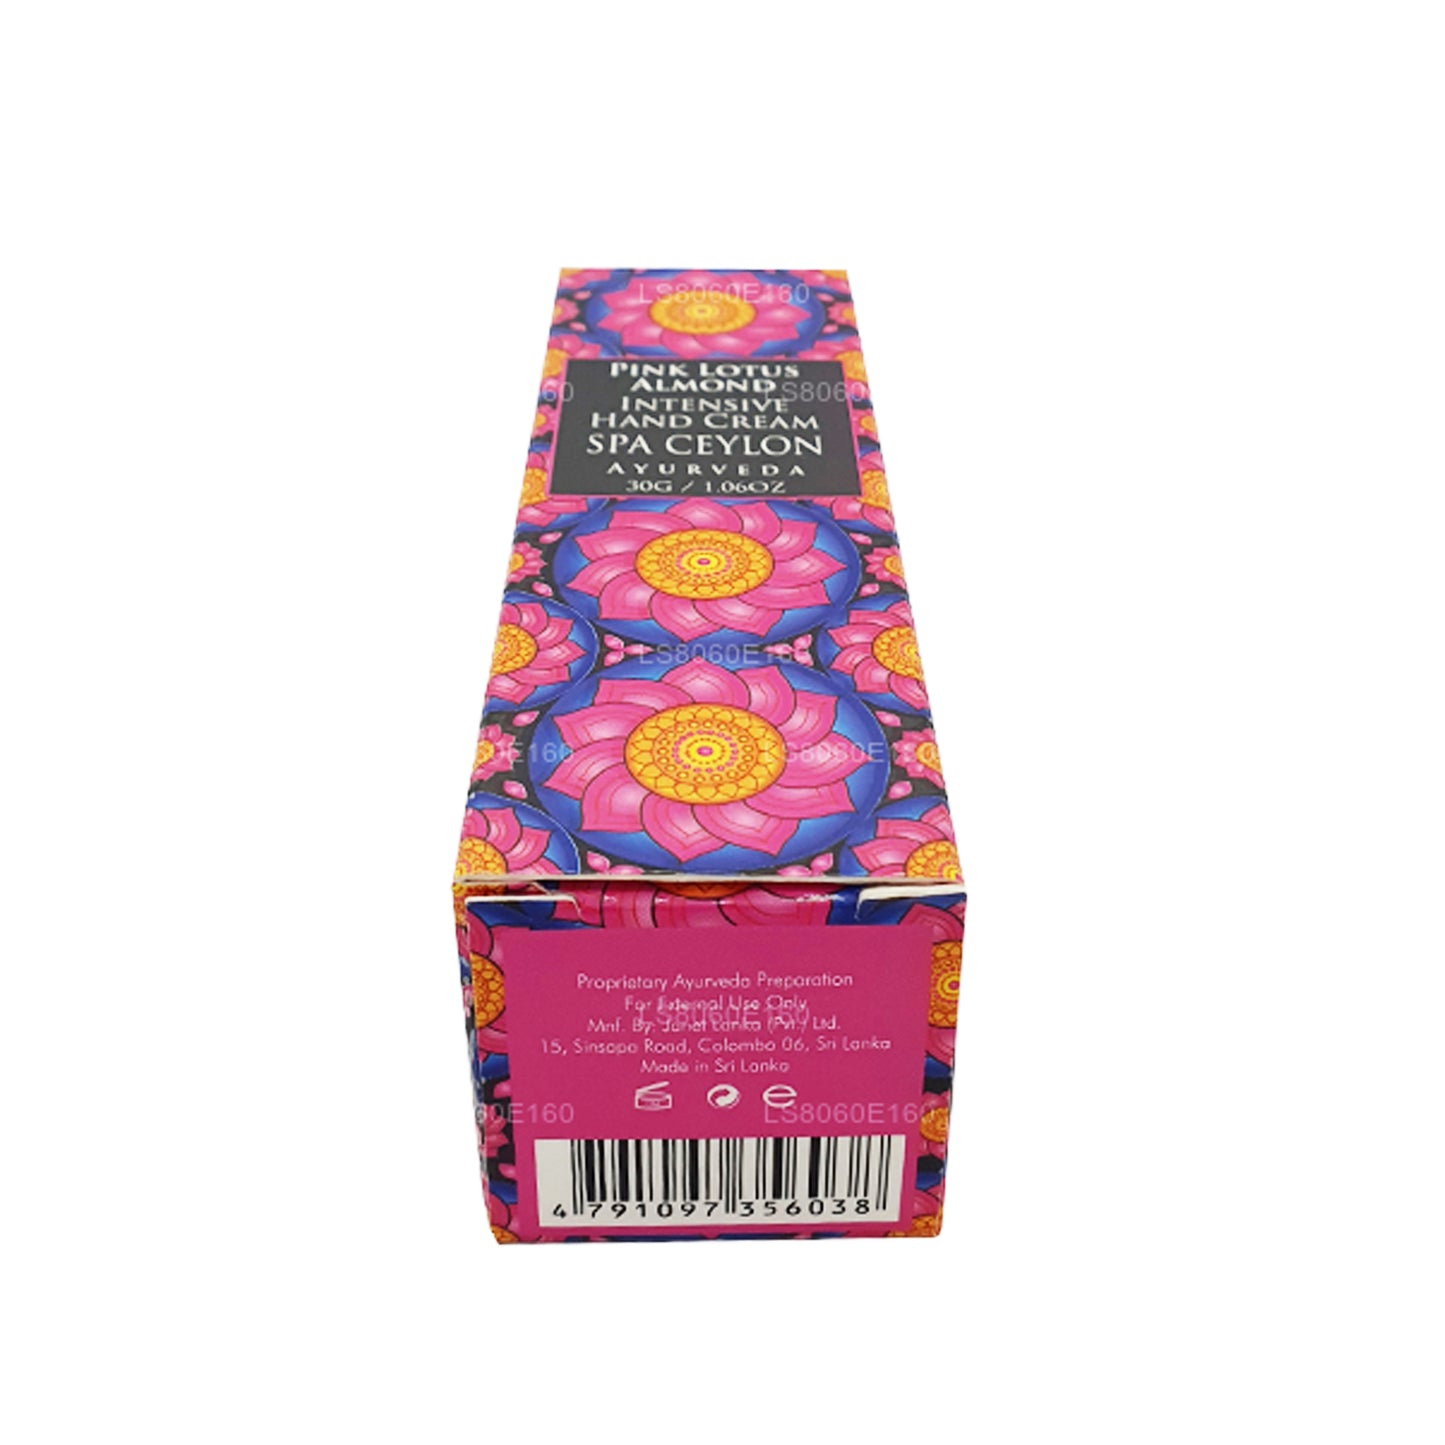 Spa Ceylon Pink Lotus Almond Intensive Handcreme (30 g)